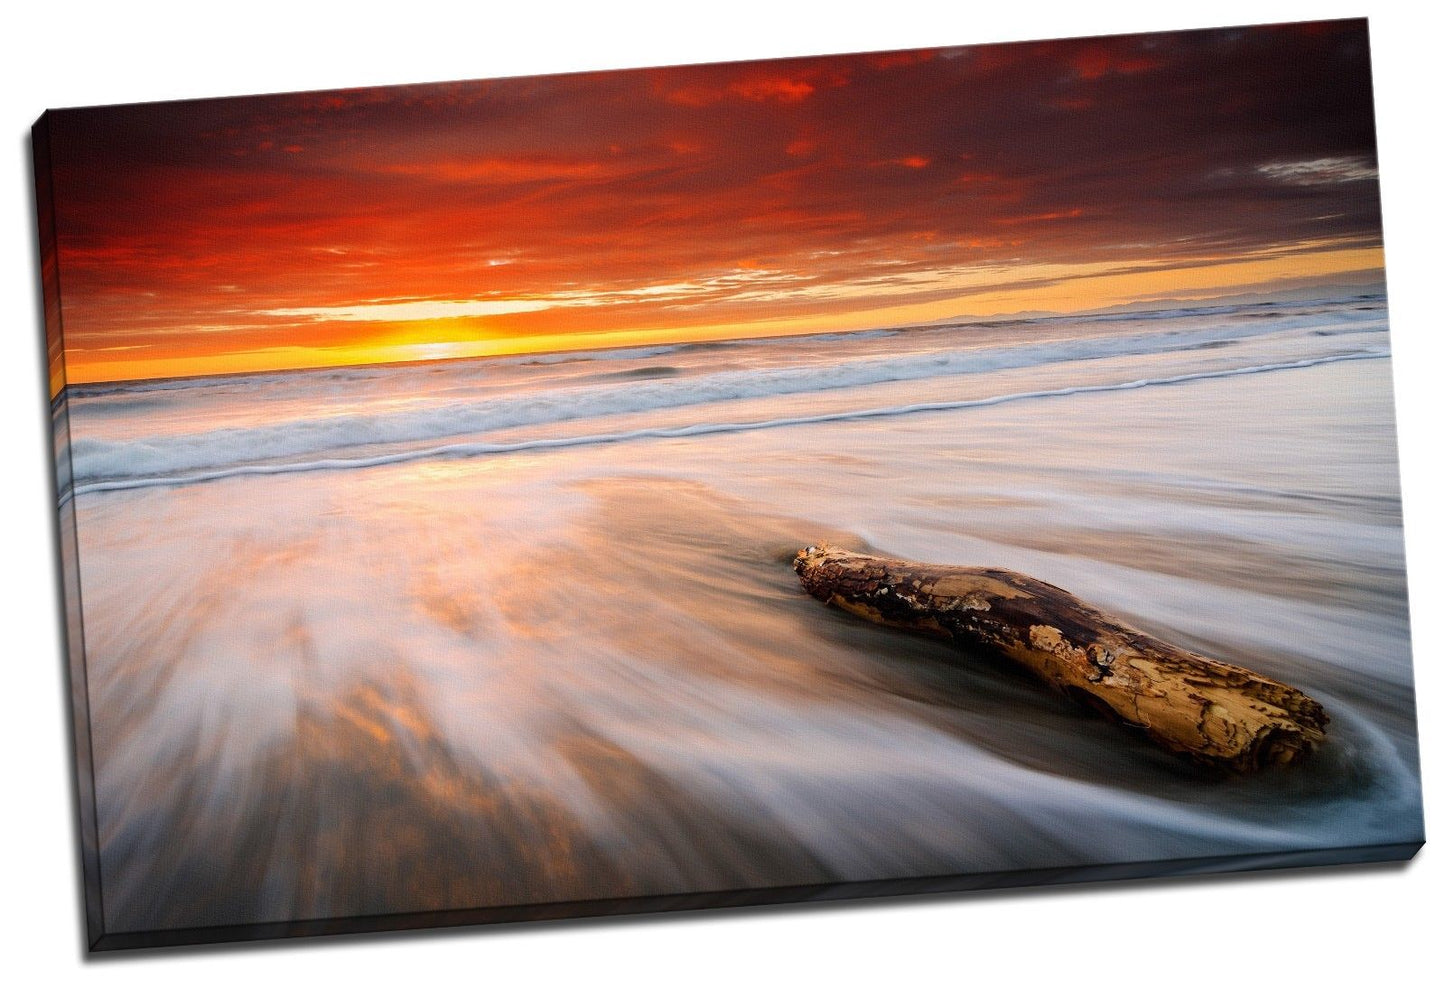 160x100x3.8cm Framed Canvas Prints Ocean Sea Time Lapse Photo Big Wall Art